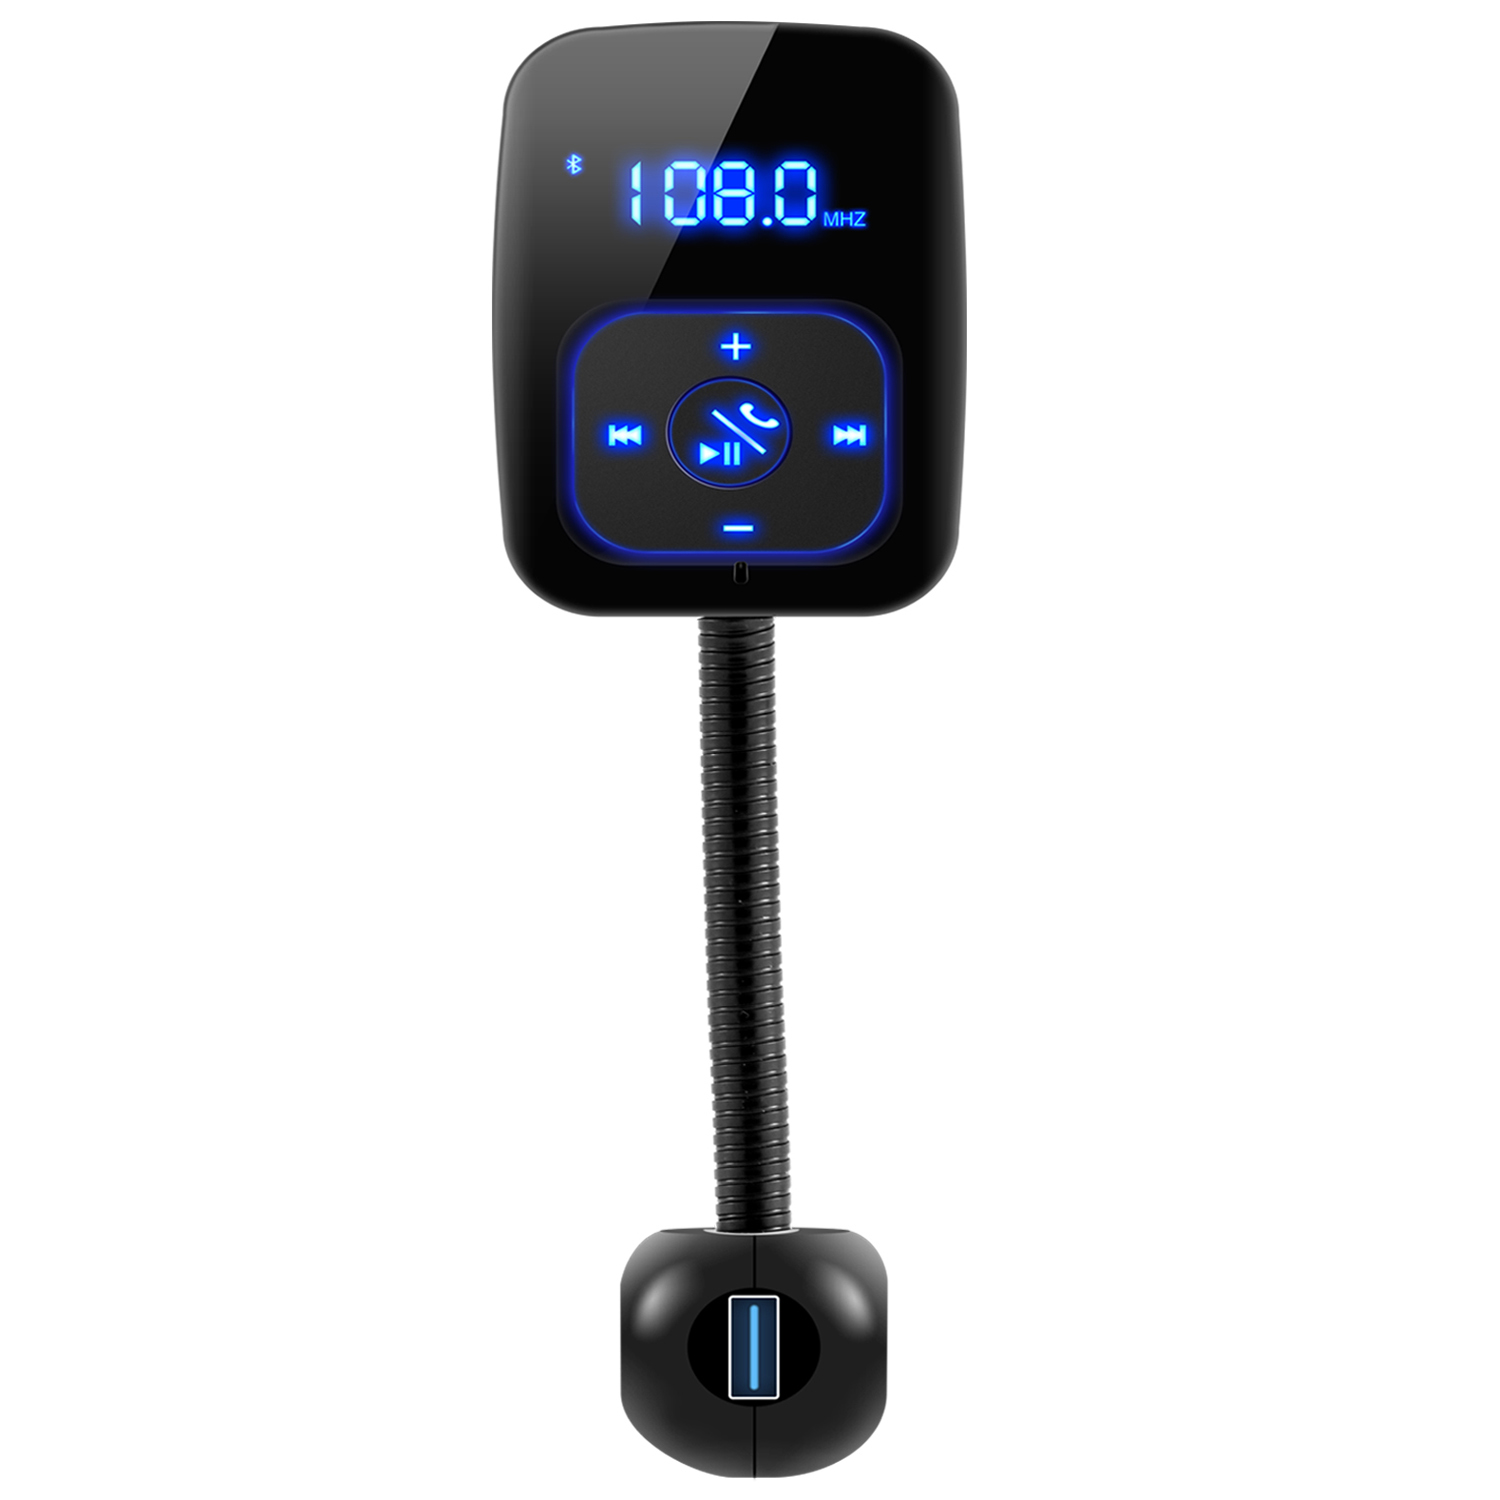 BT006 12-24V Car Bluetooth Handsfree MP3 Oled Player